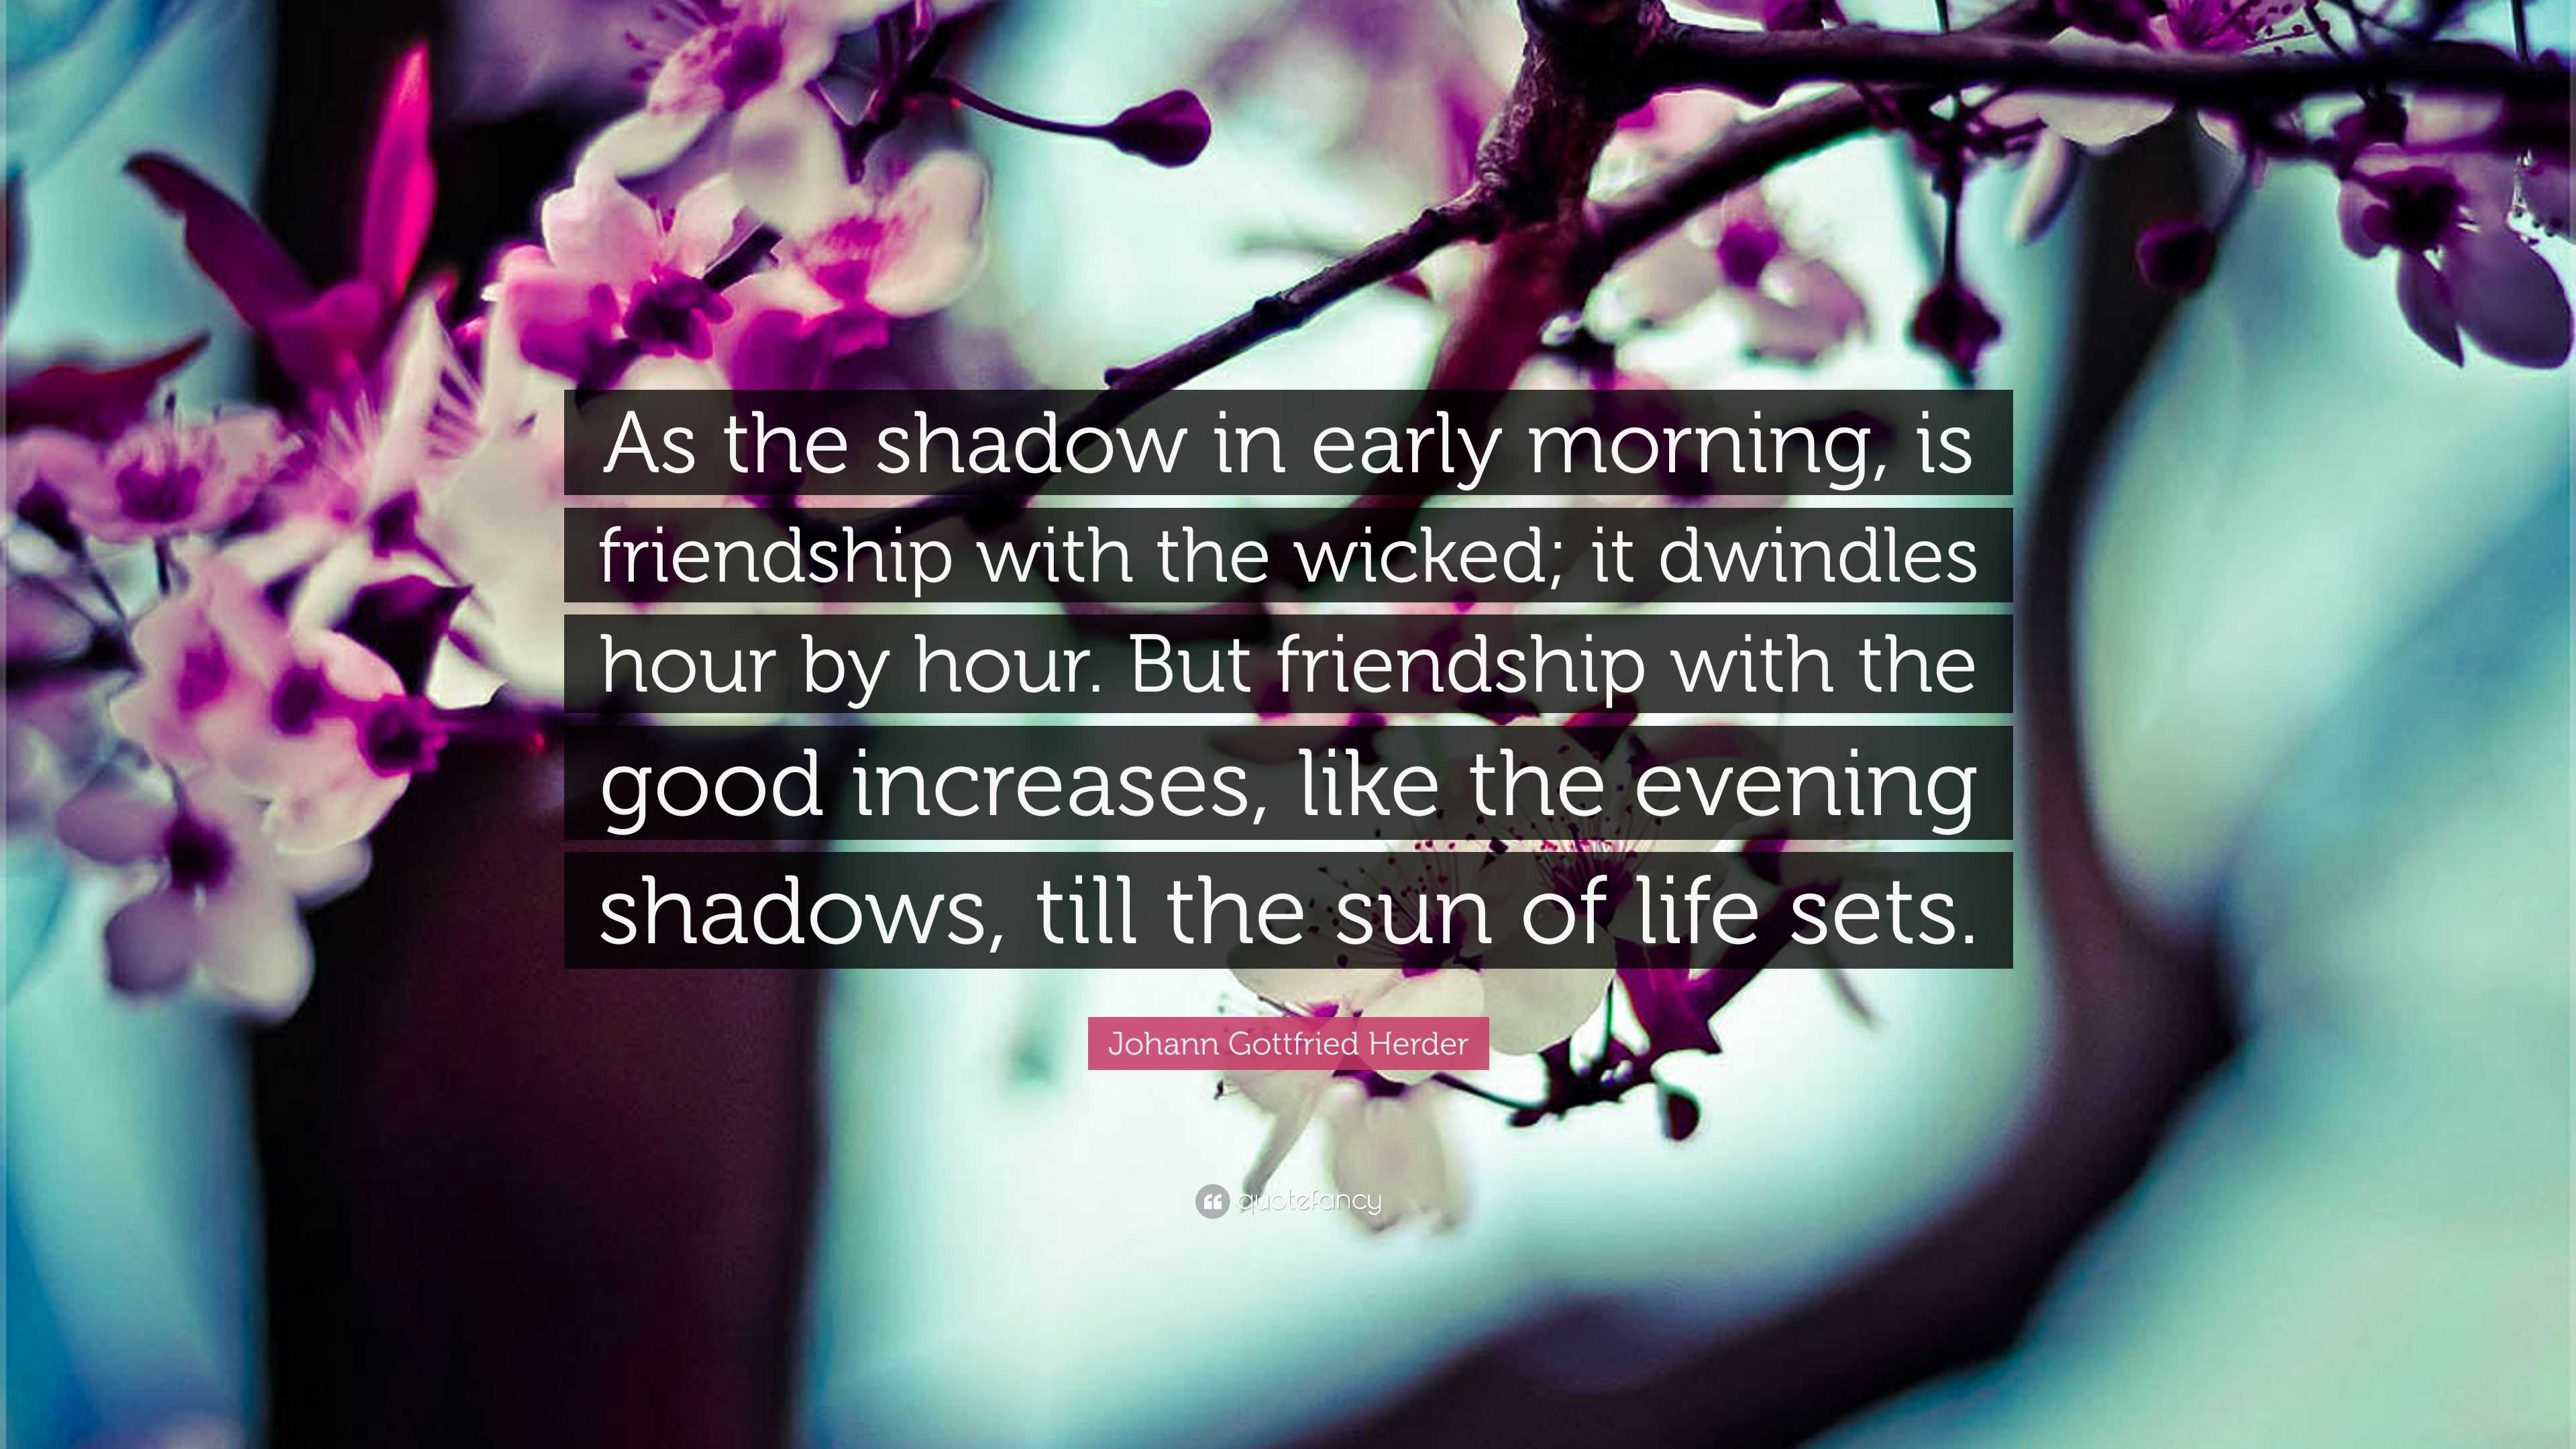 Shadows of Friendship